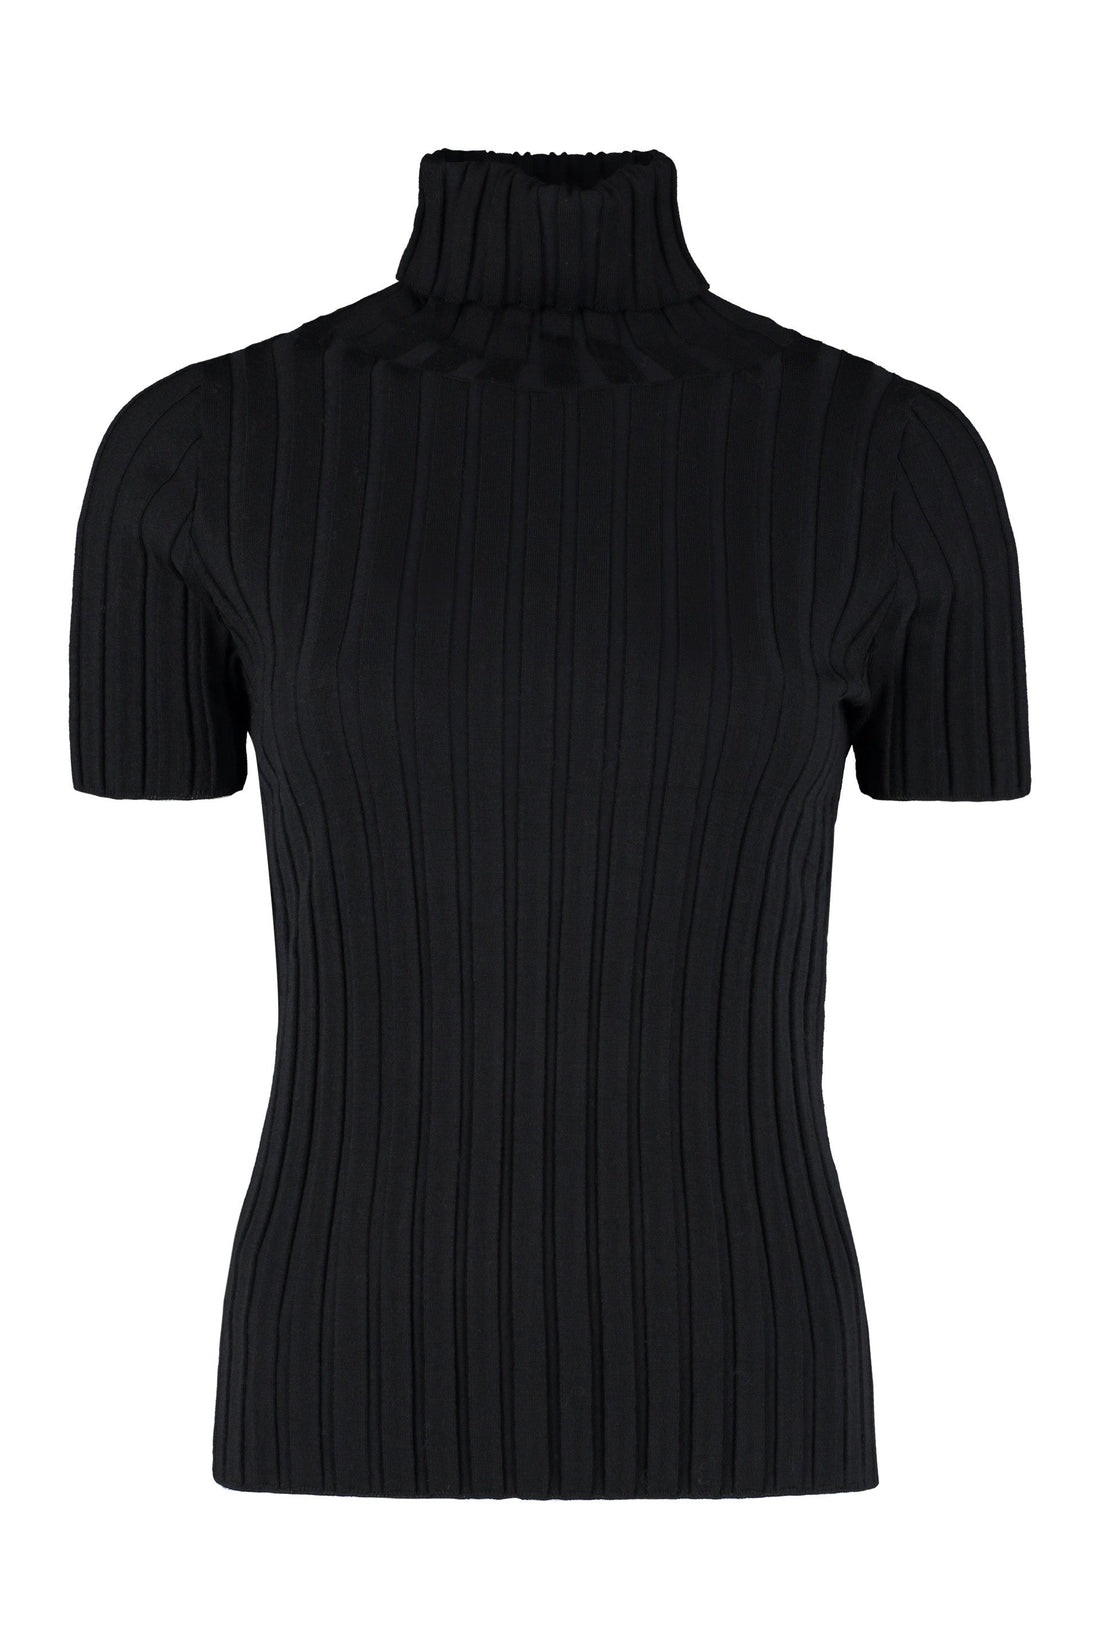 Aspesi-OUTLET-SALE-Ribbed turtleneck sweater-ARCHIVIST